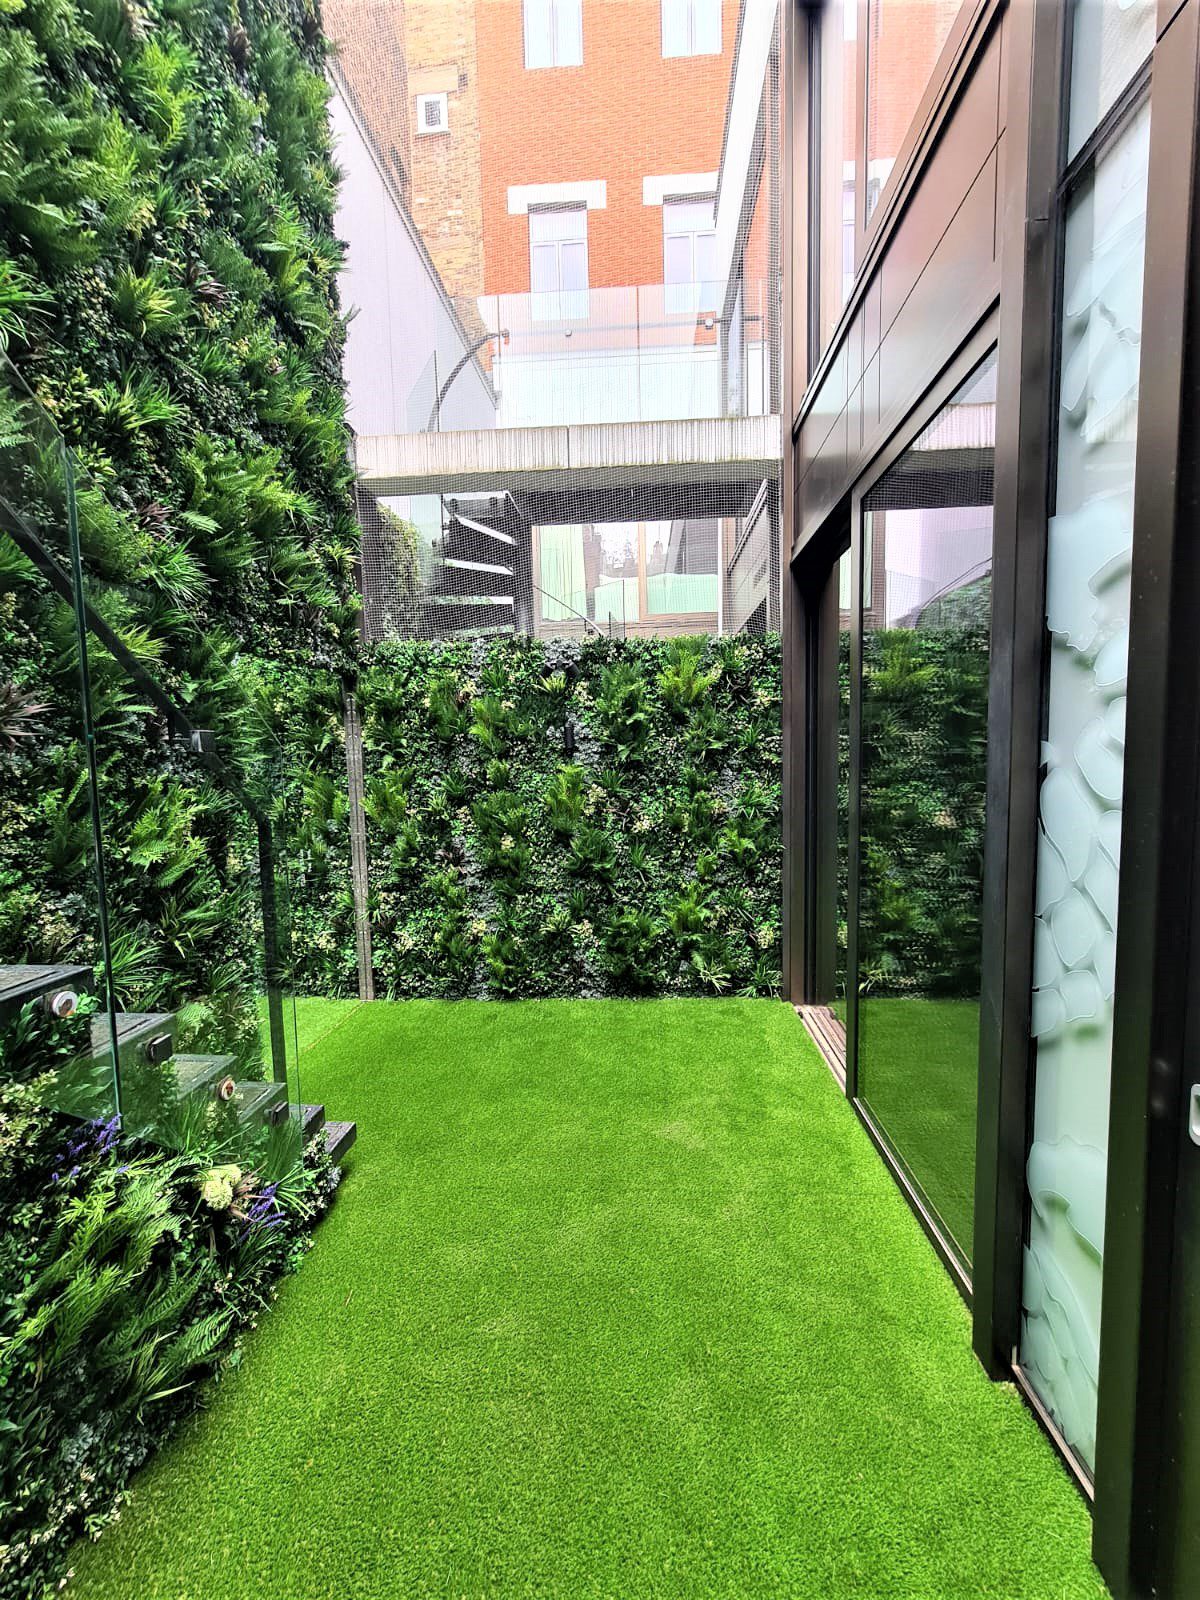 Artificial Green Wall in London Basement